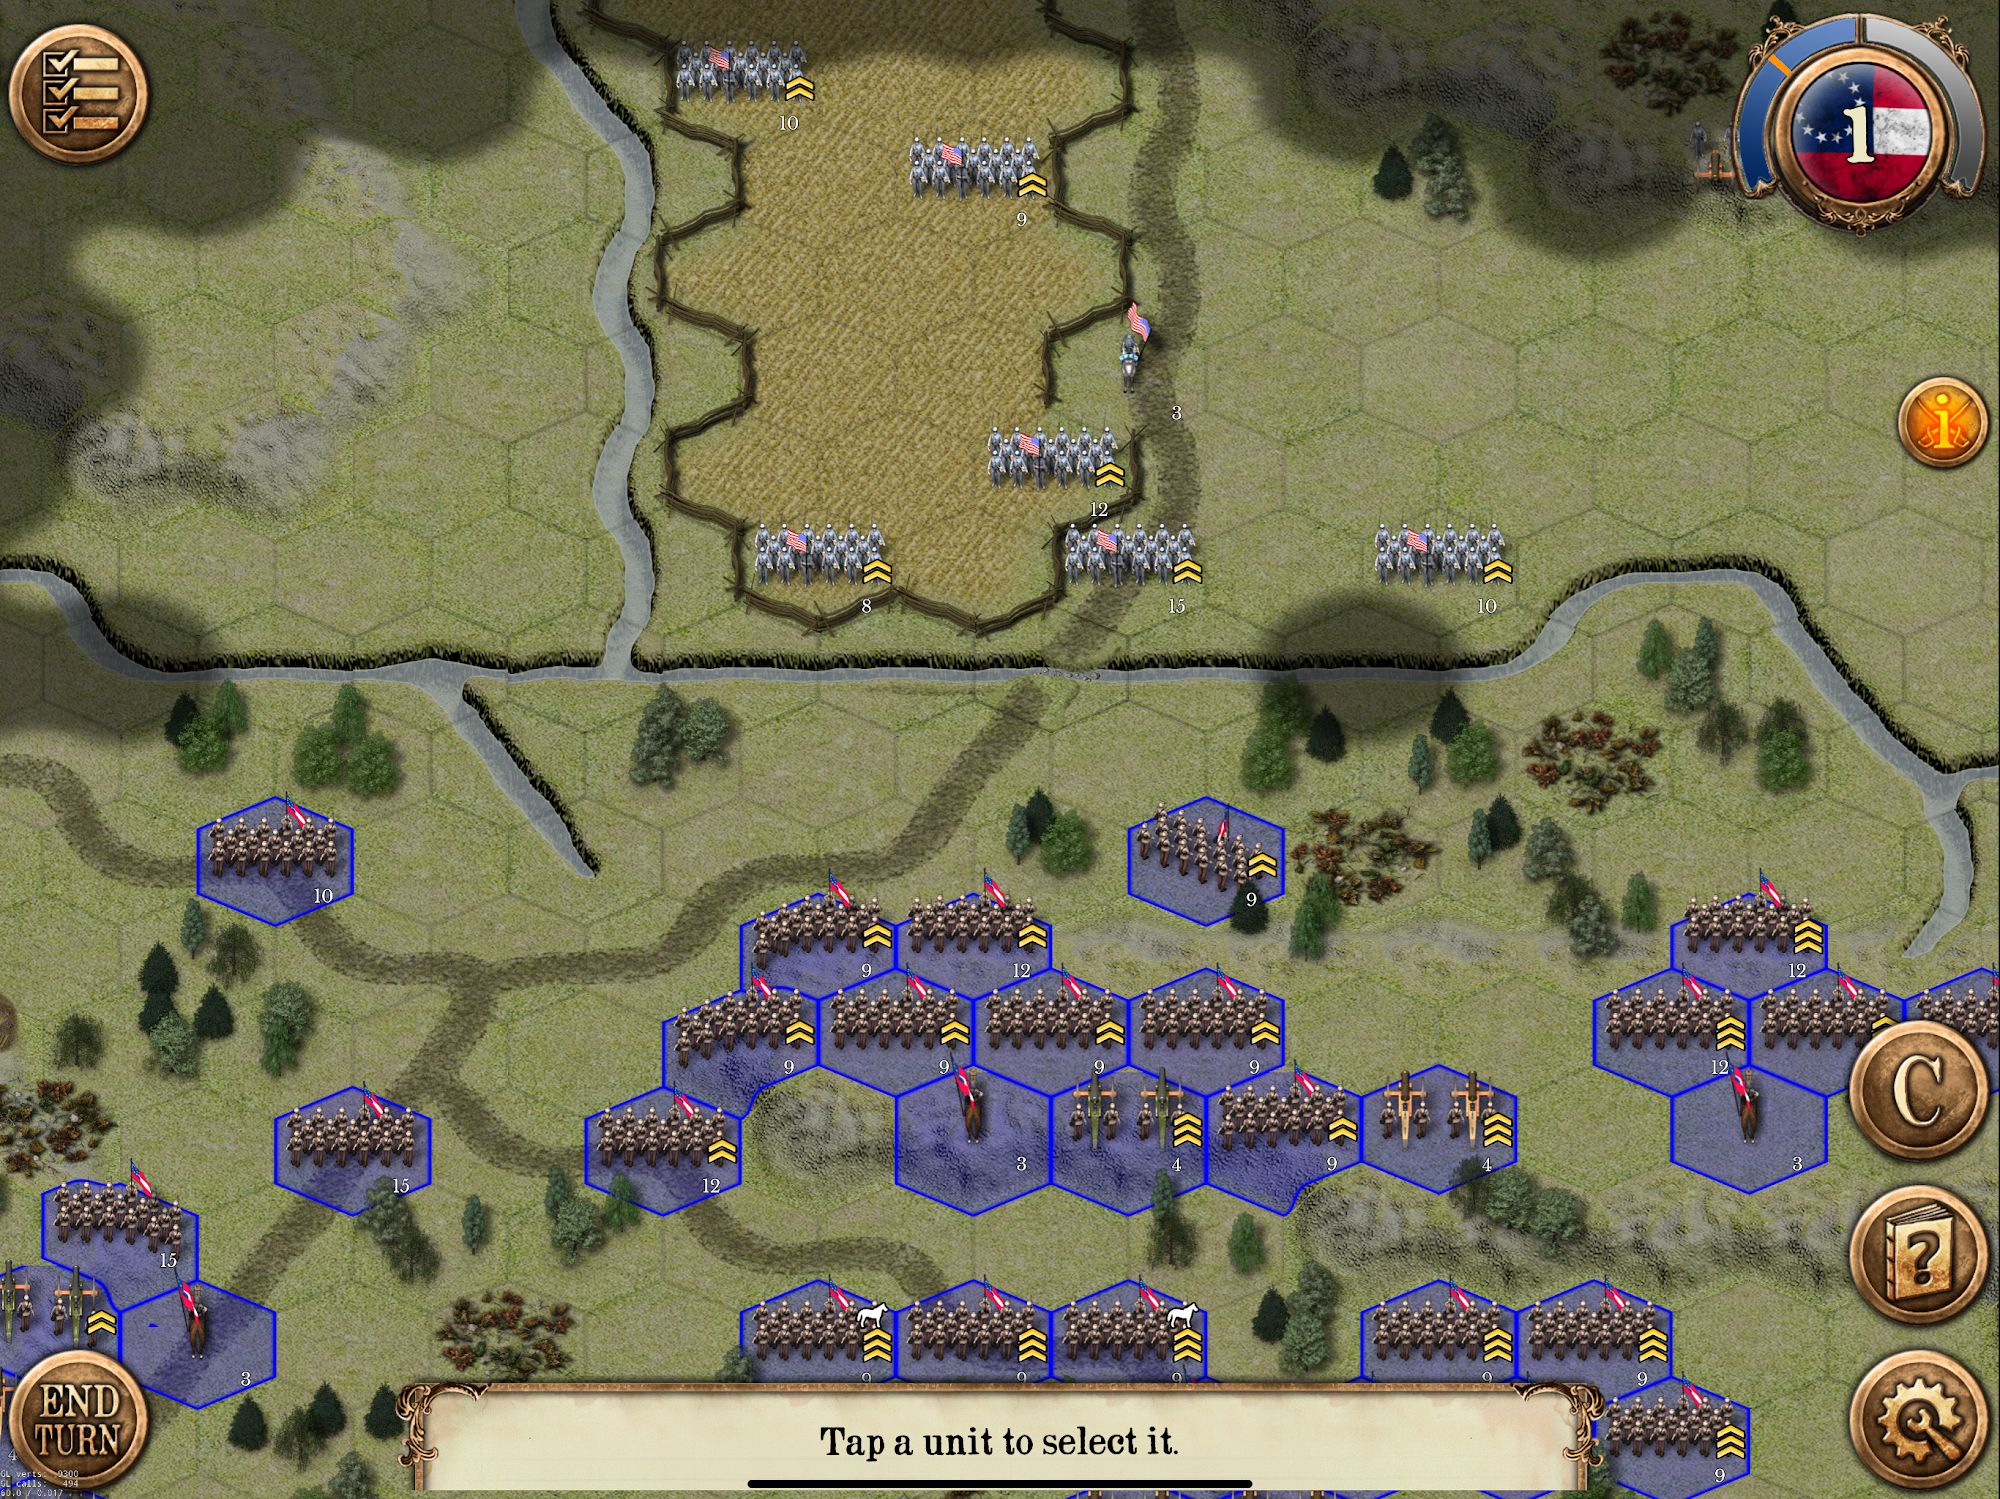 Chickamauga Battles screenshot 1